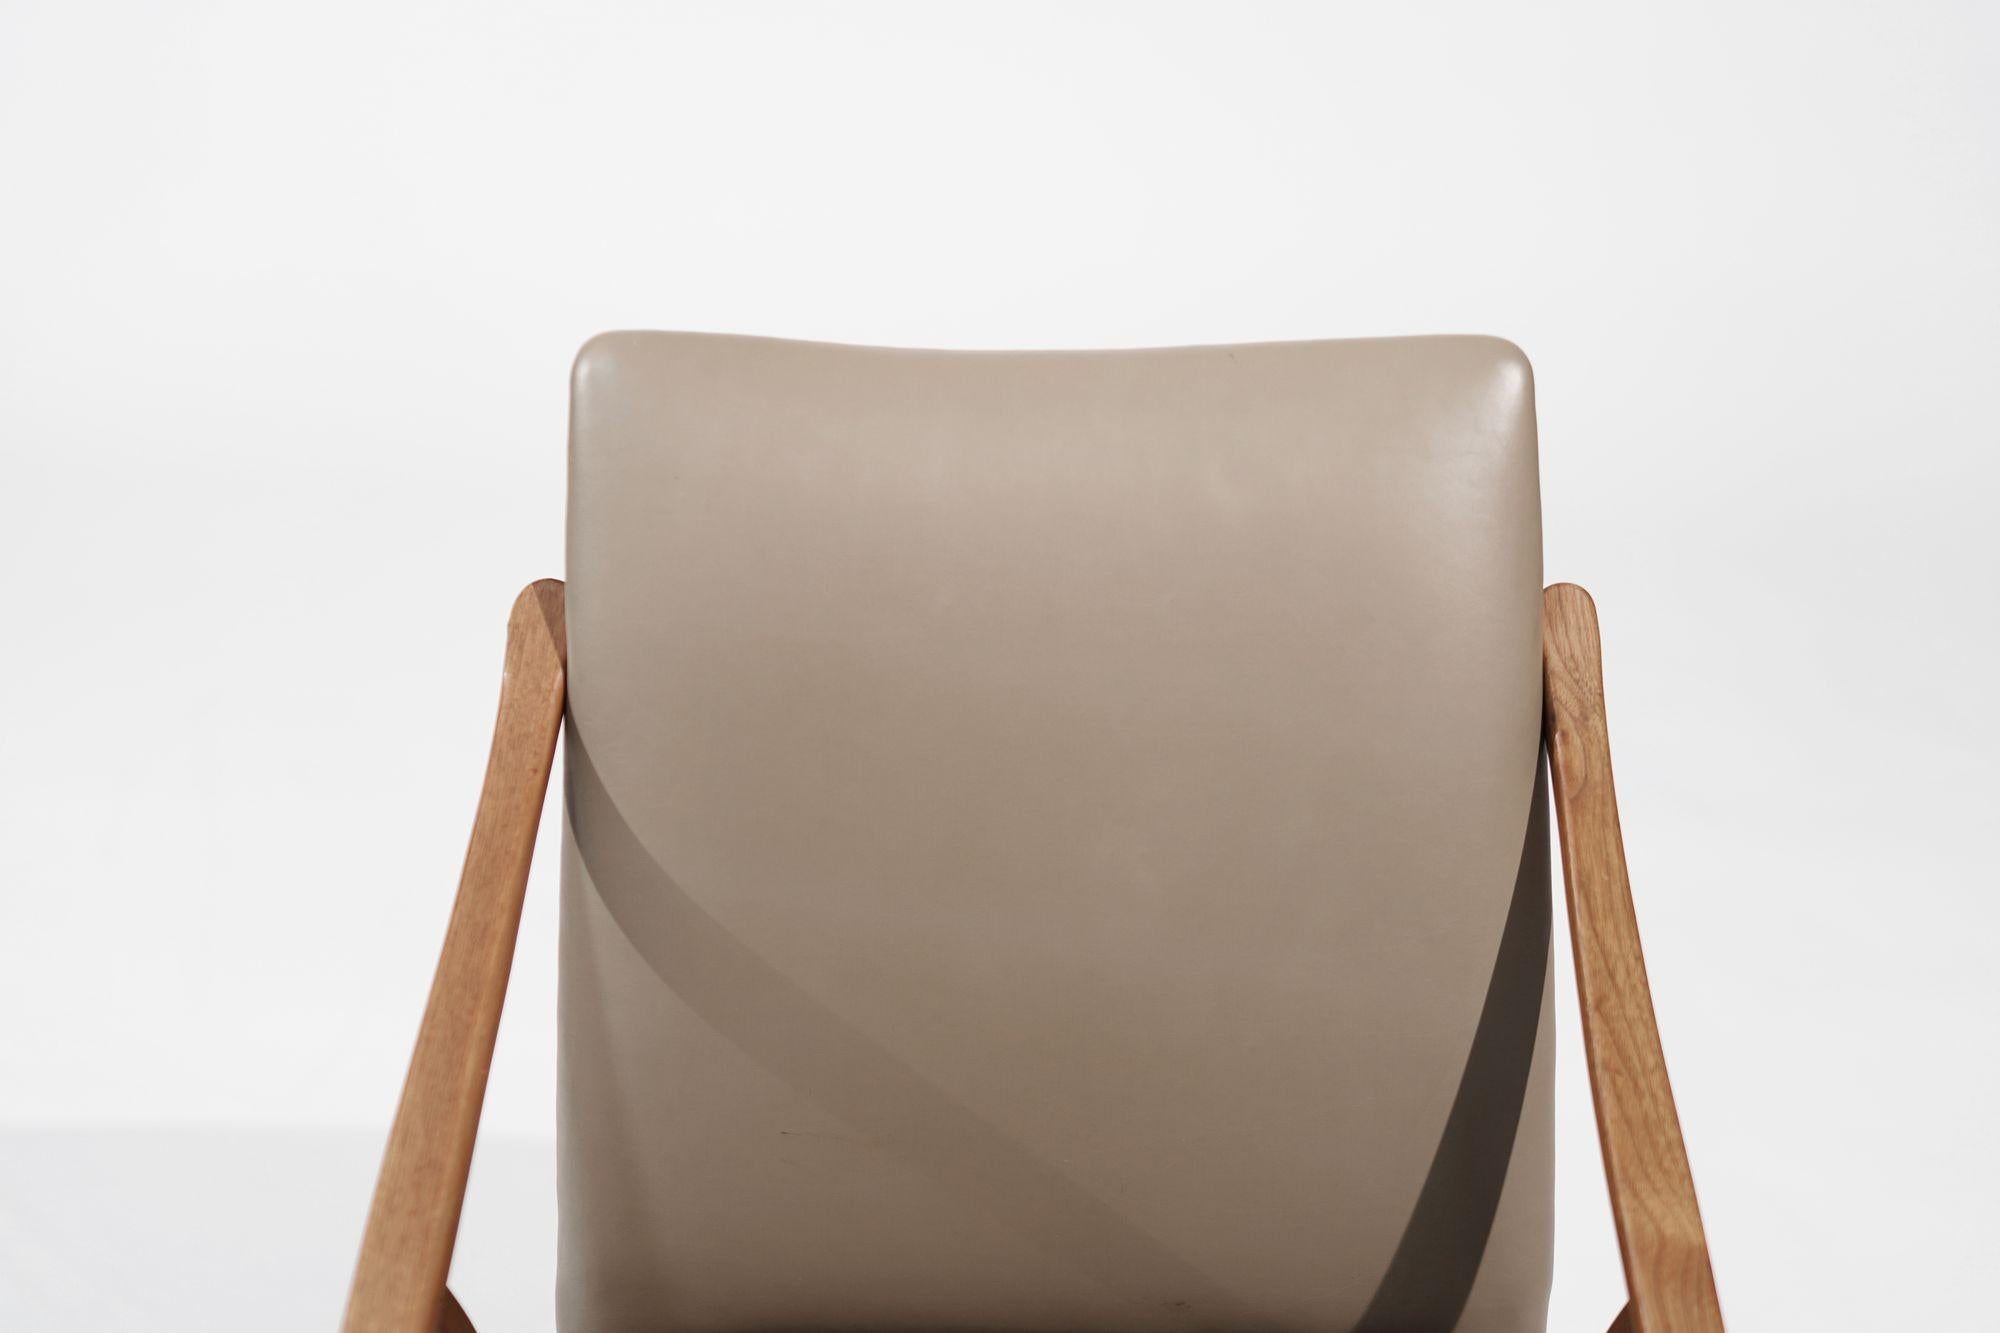 Sculptural Bent Teak Lounge Chair, Sweden, C. 1950s For Sale 1